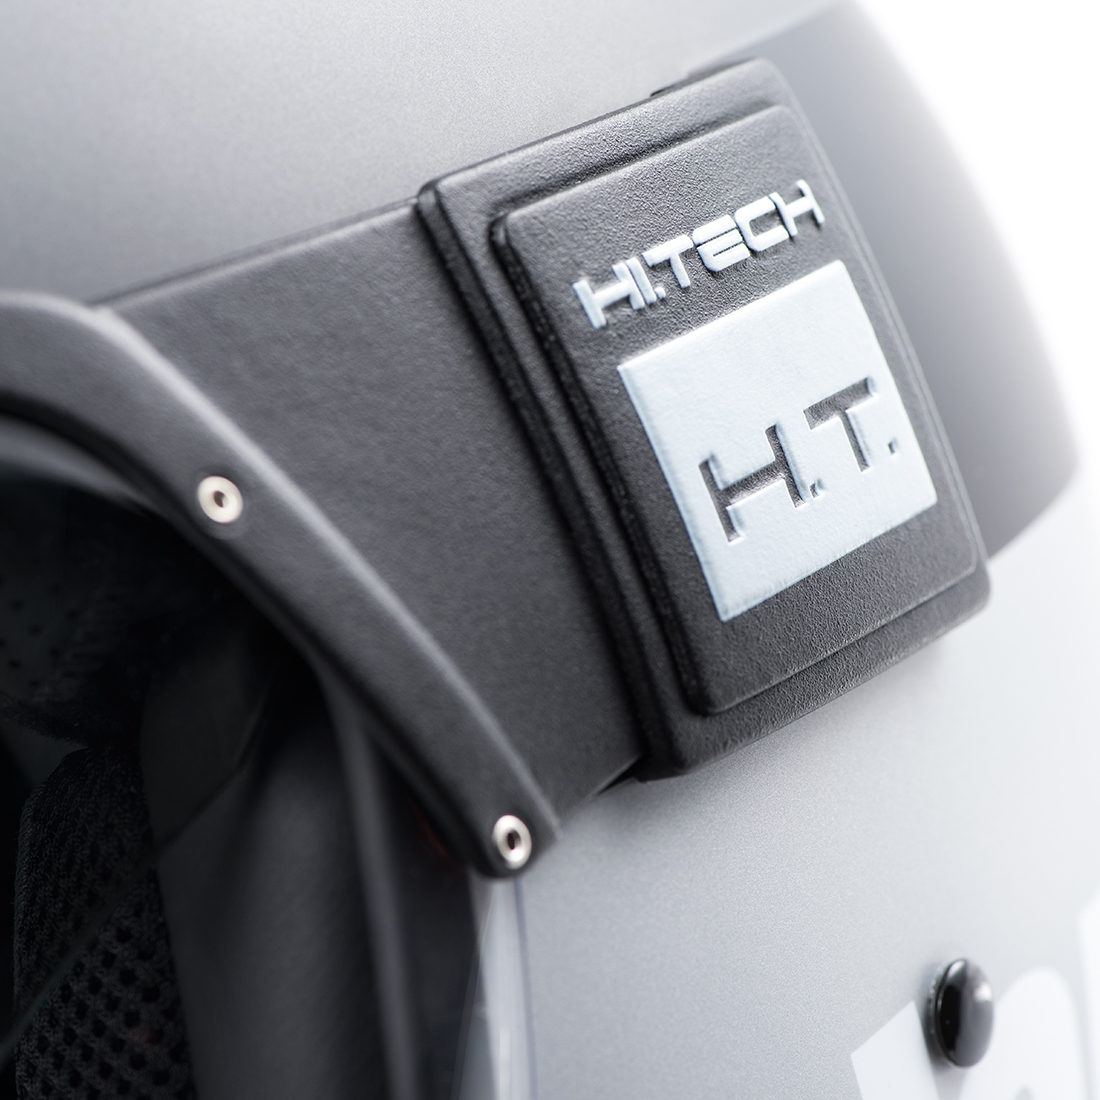 Steelbird Blauer Pod Classic ISI/ECE Certified Open Face Helmet Fitted With Inner Smoke Sun Shield And Outer Clear Visor (Matt Titanium Grey)